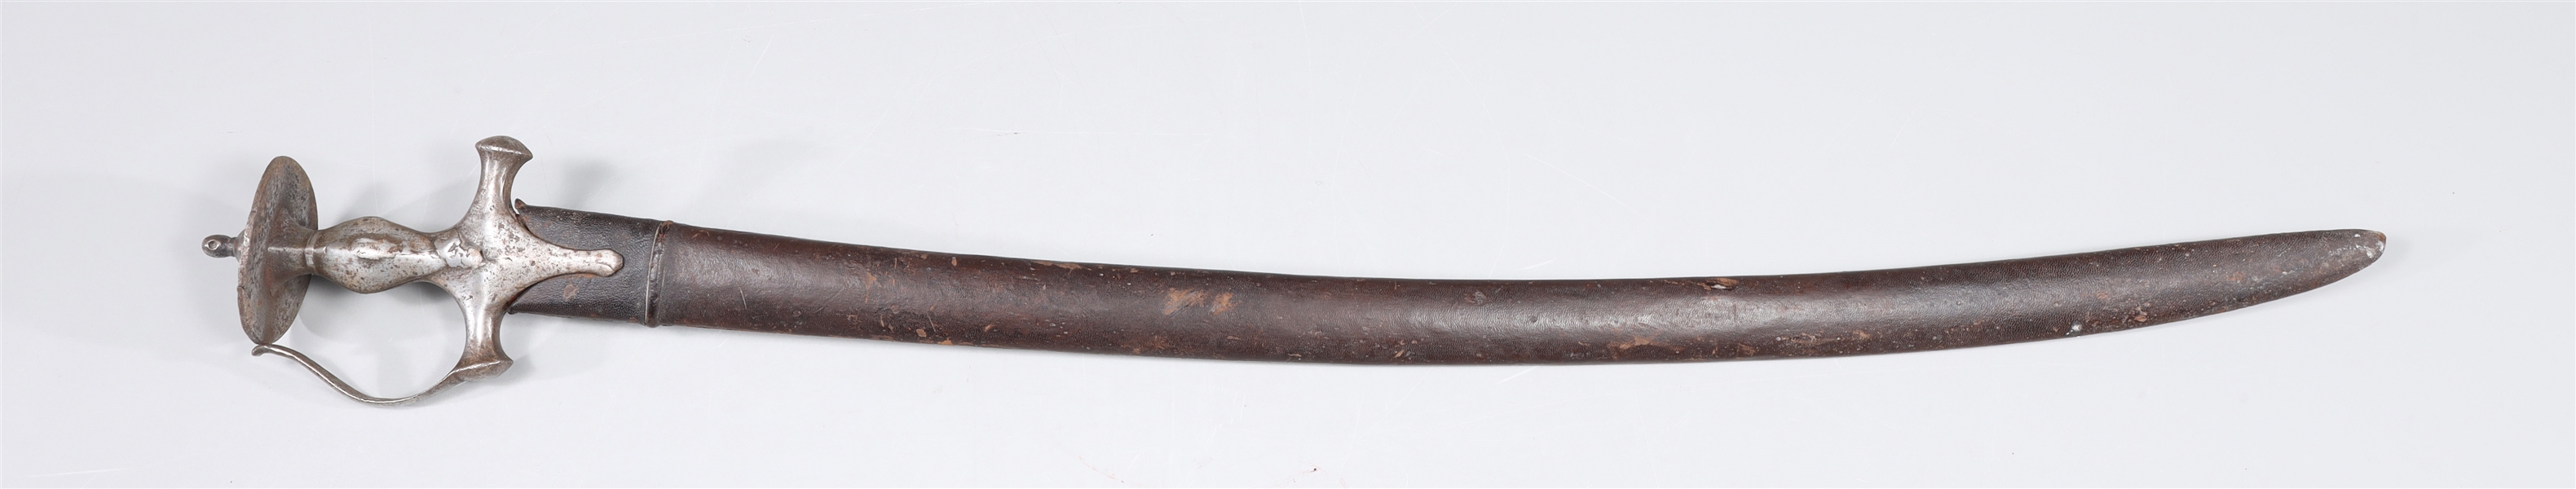 Antique Indo Persian talwar sword 30405a